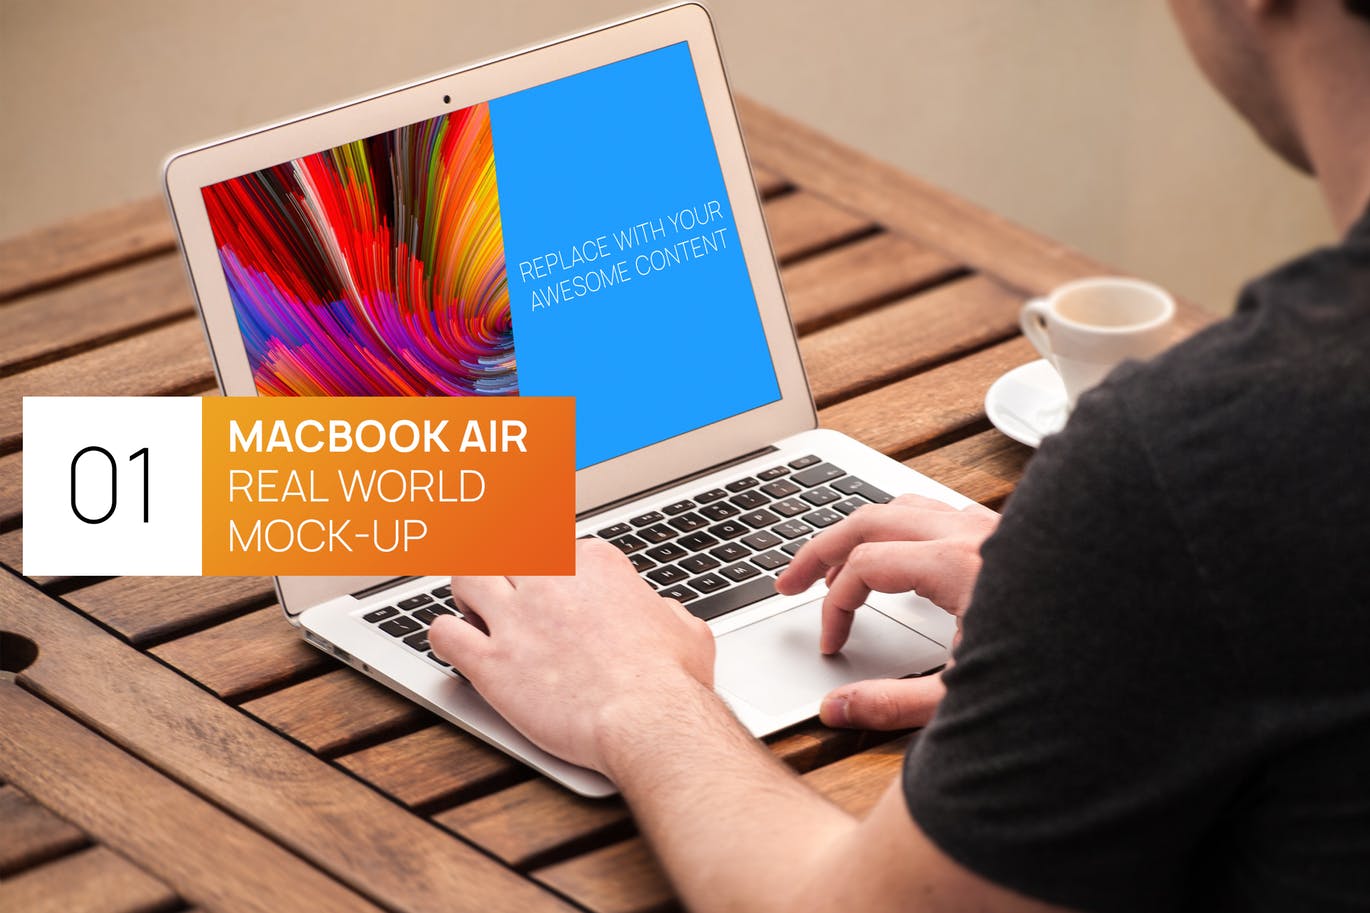 Macbook Air实景使用场景第一素材精选样机模板v1 Person Using MacBook Air Real World Photo Mock-up插图